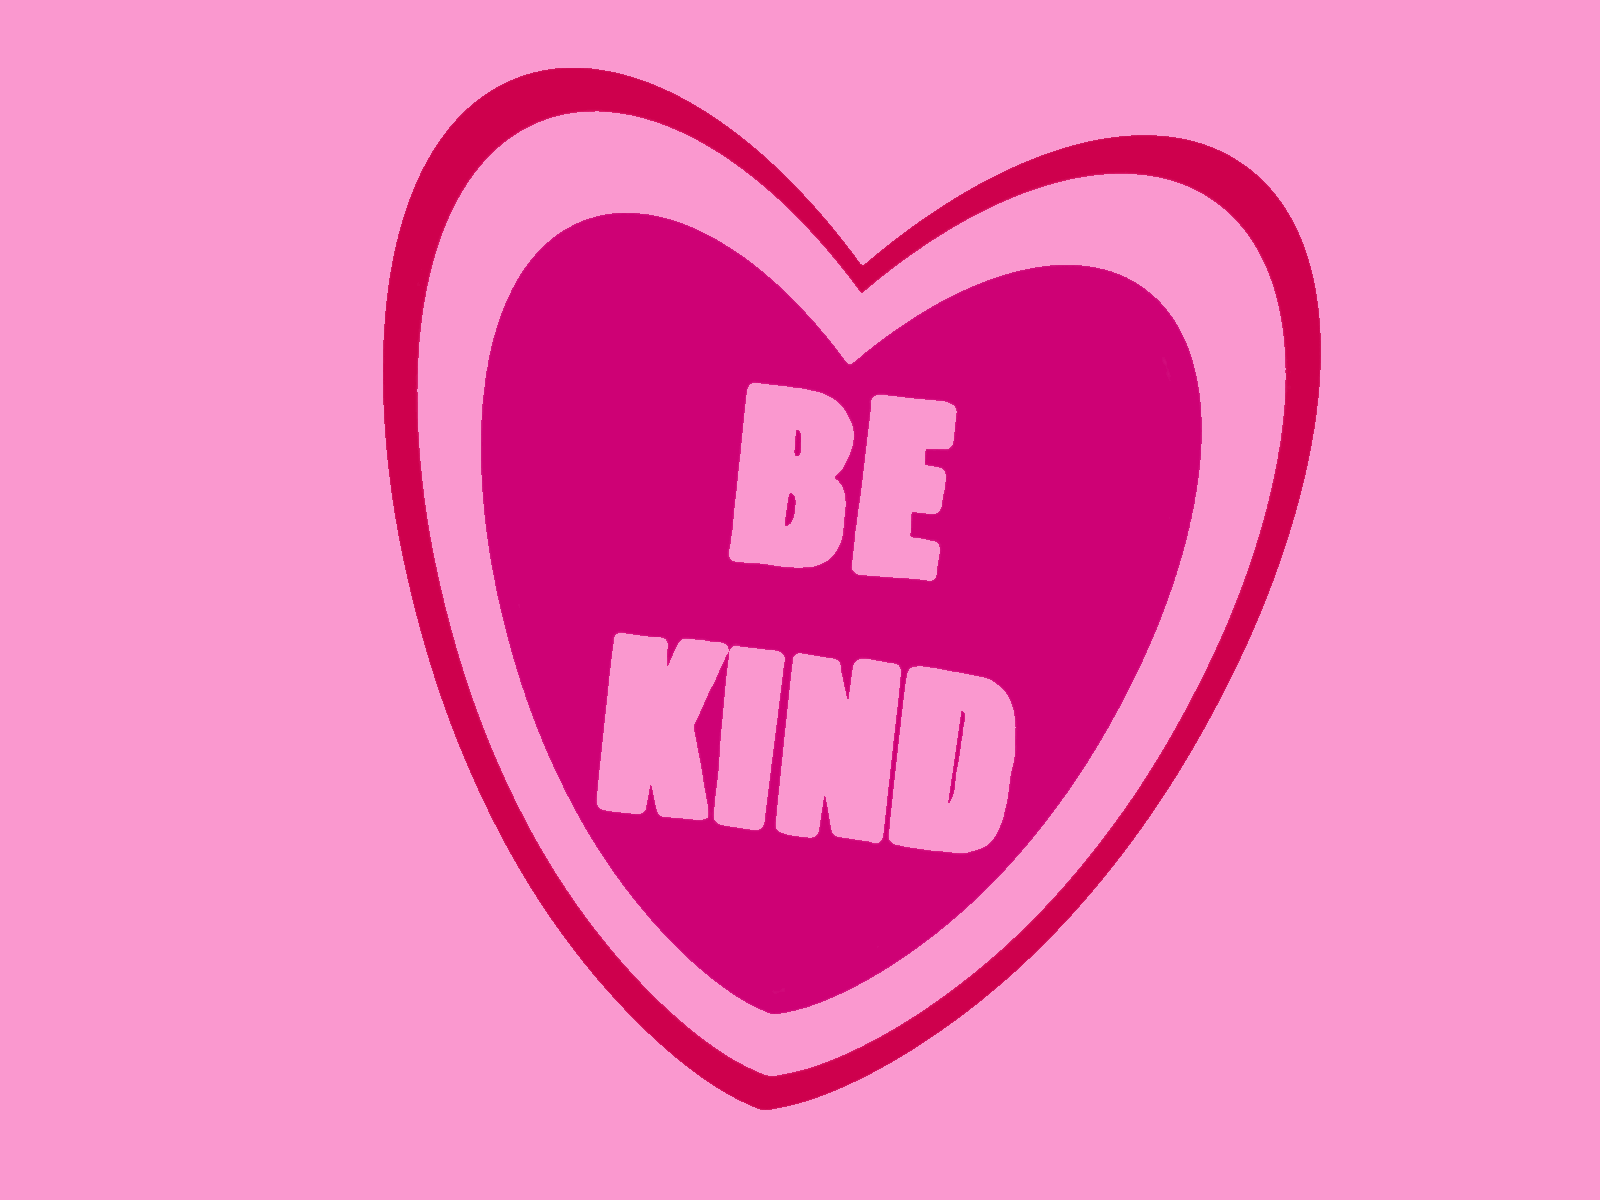 Be kind illustration by Megan Howell on Dribbble